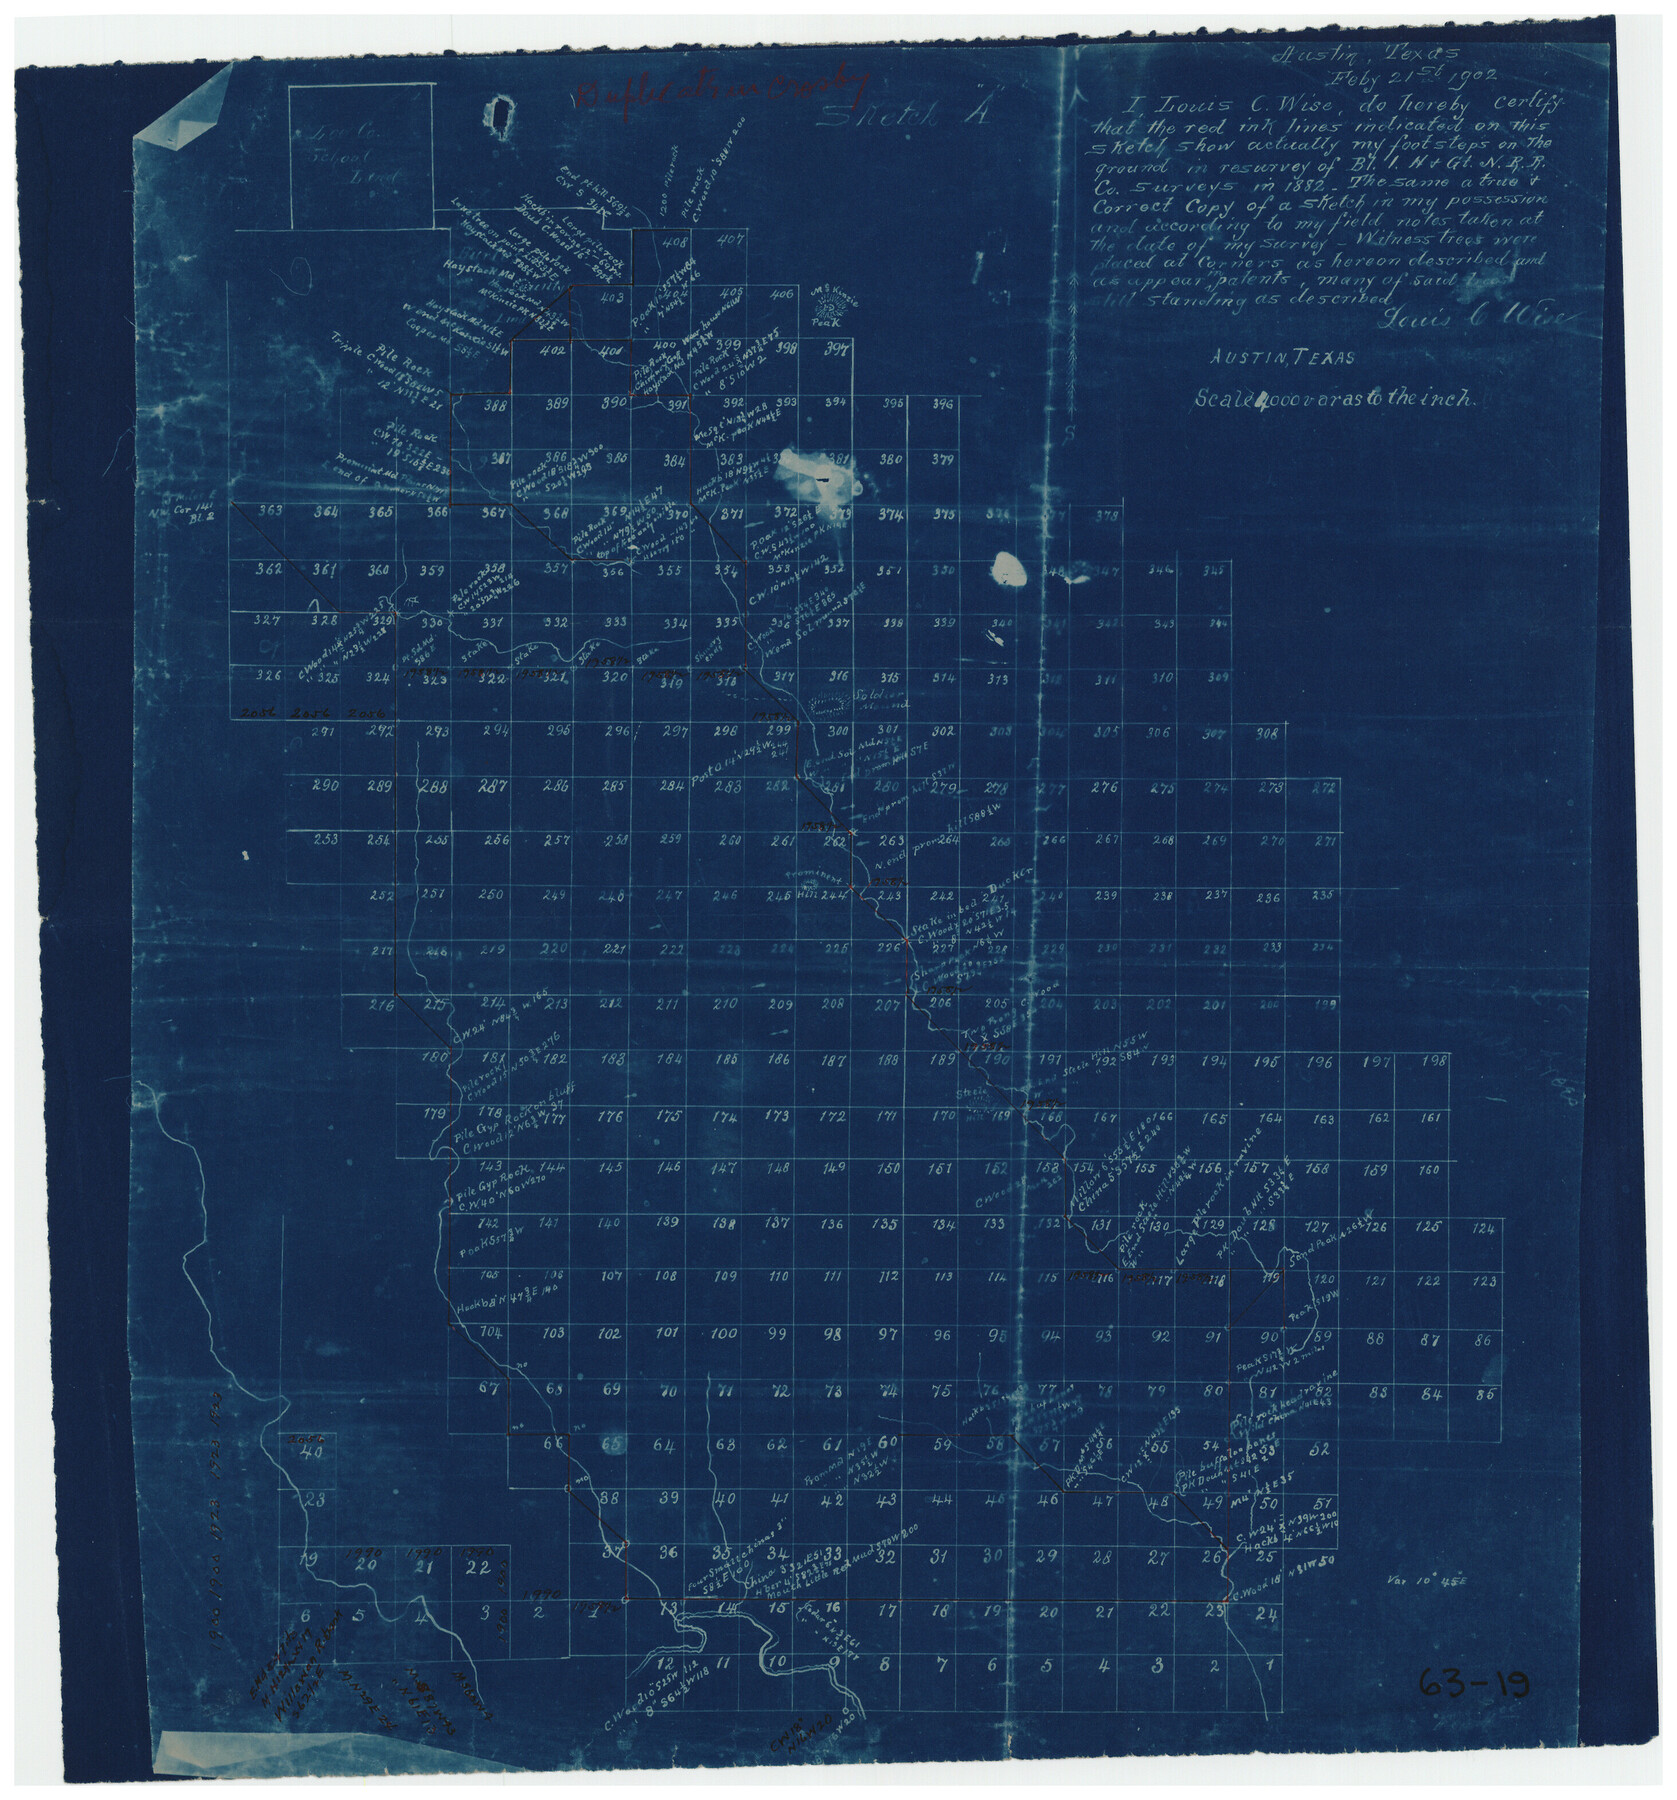 90892, [H. & G. N. RR. Co. Block 1], Twichell Survey Records